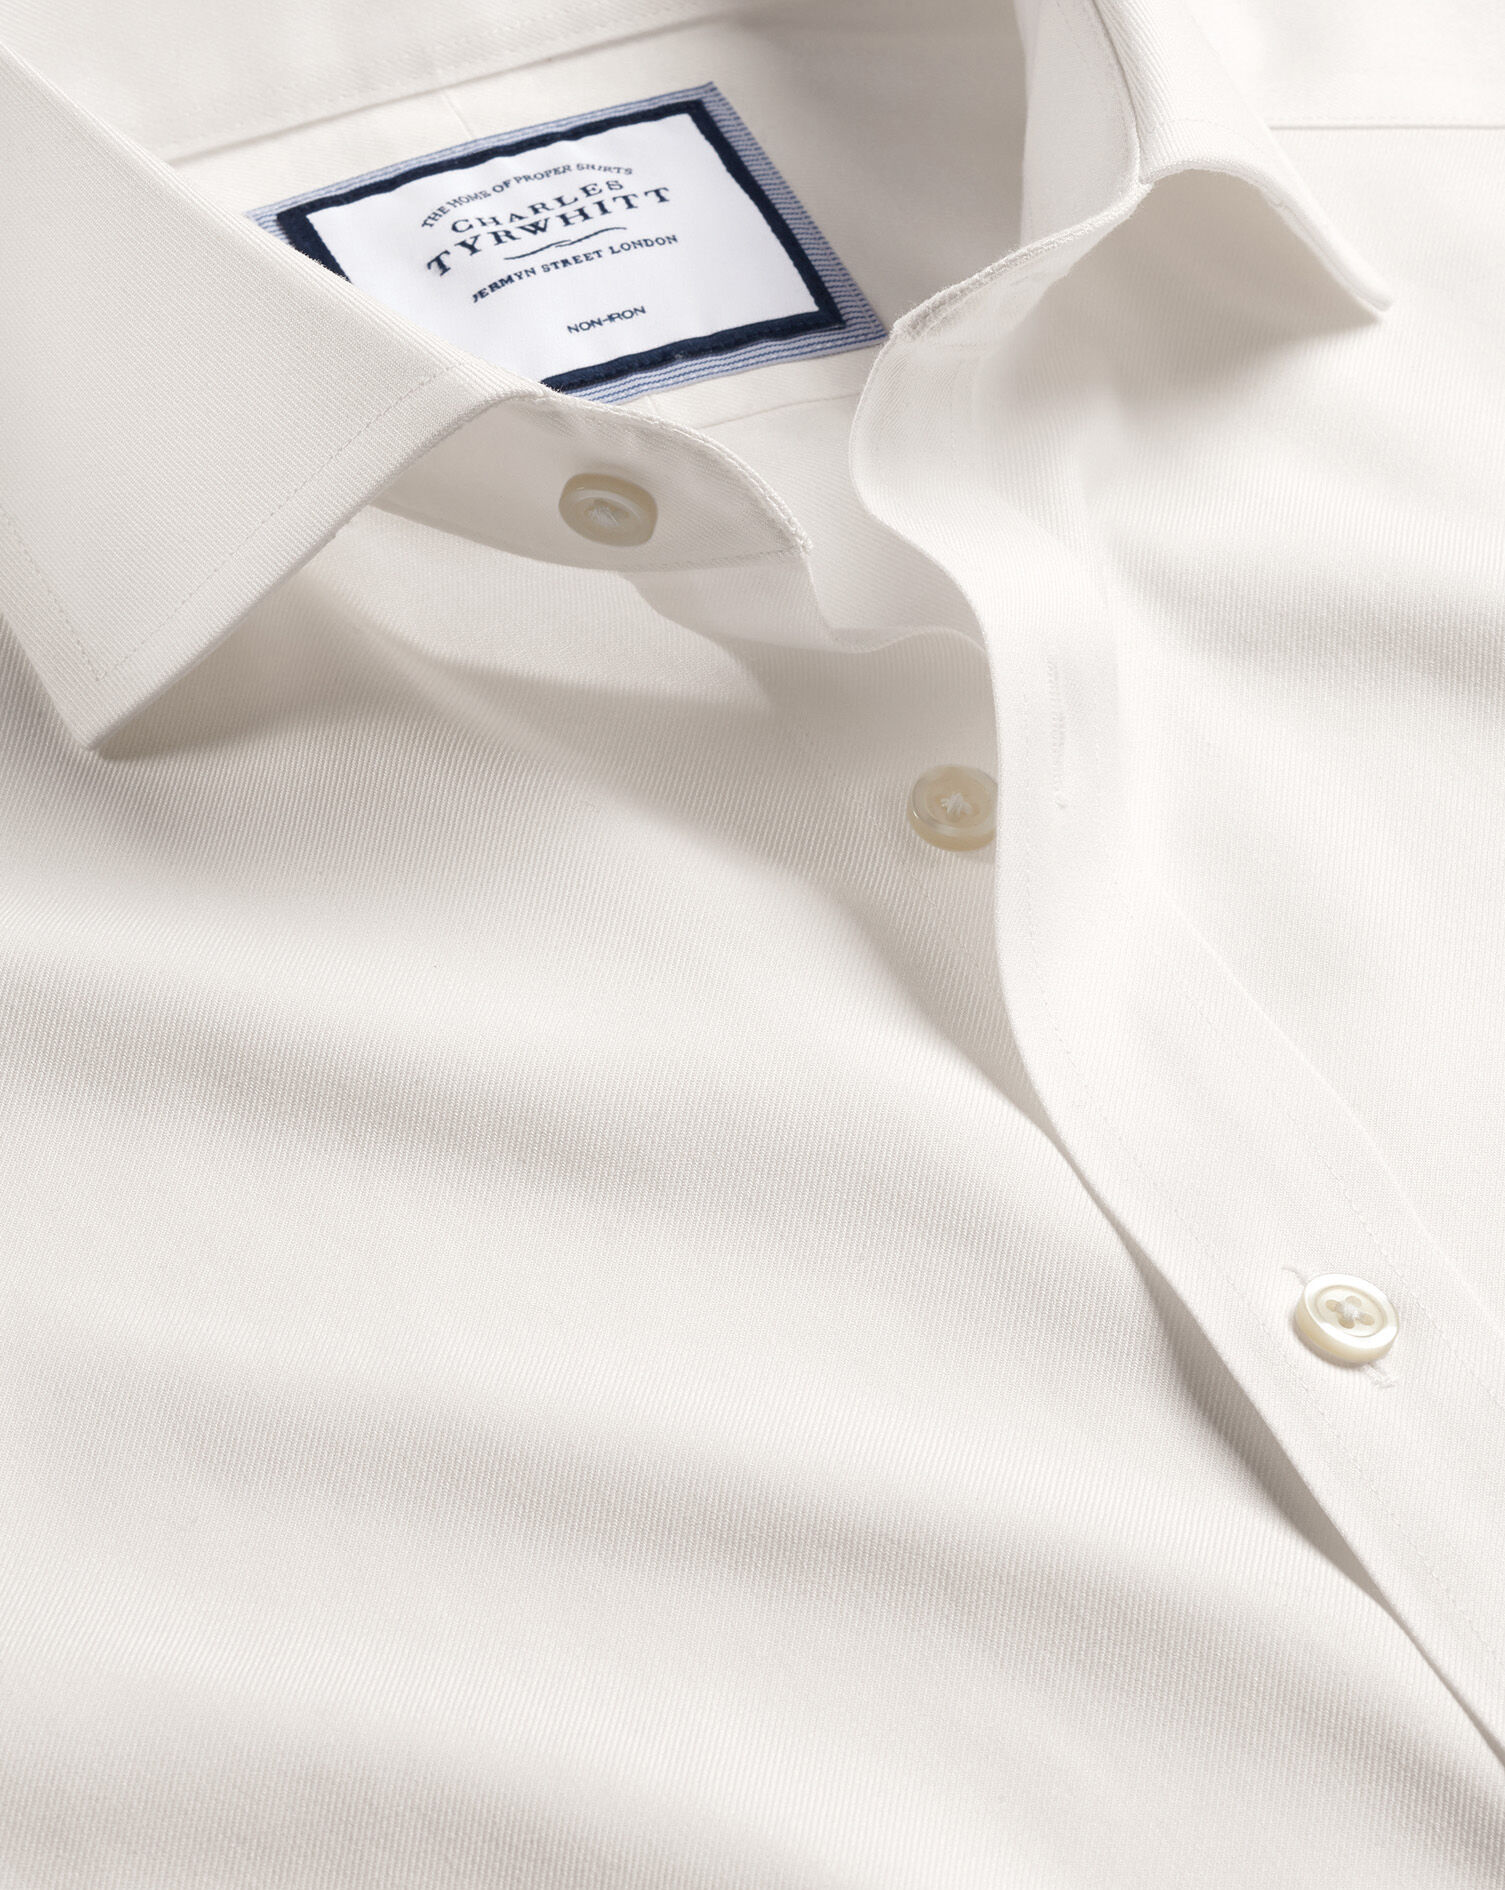 Charles Tyrwhitt Charles Tyrwhitt Mens Shirt Long Sleeve L Cream 100% Cotton 